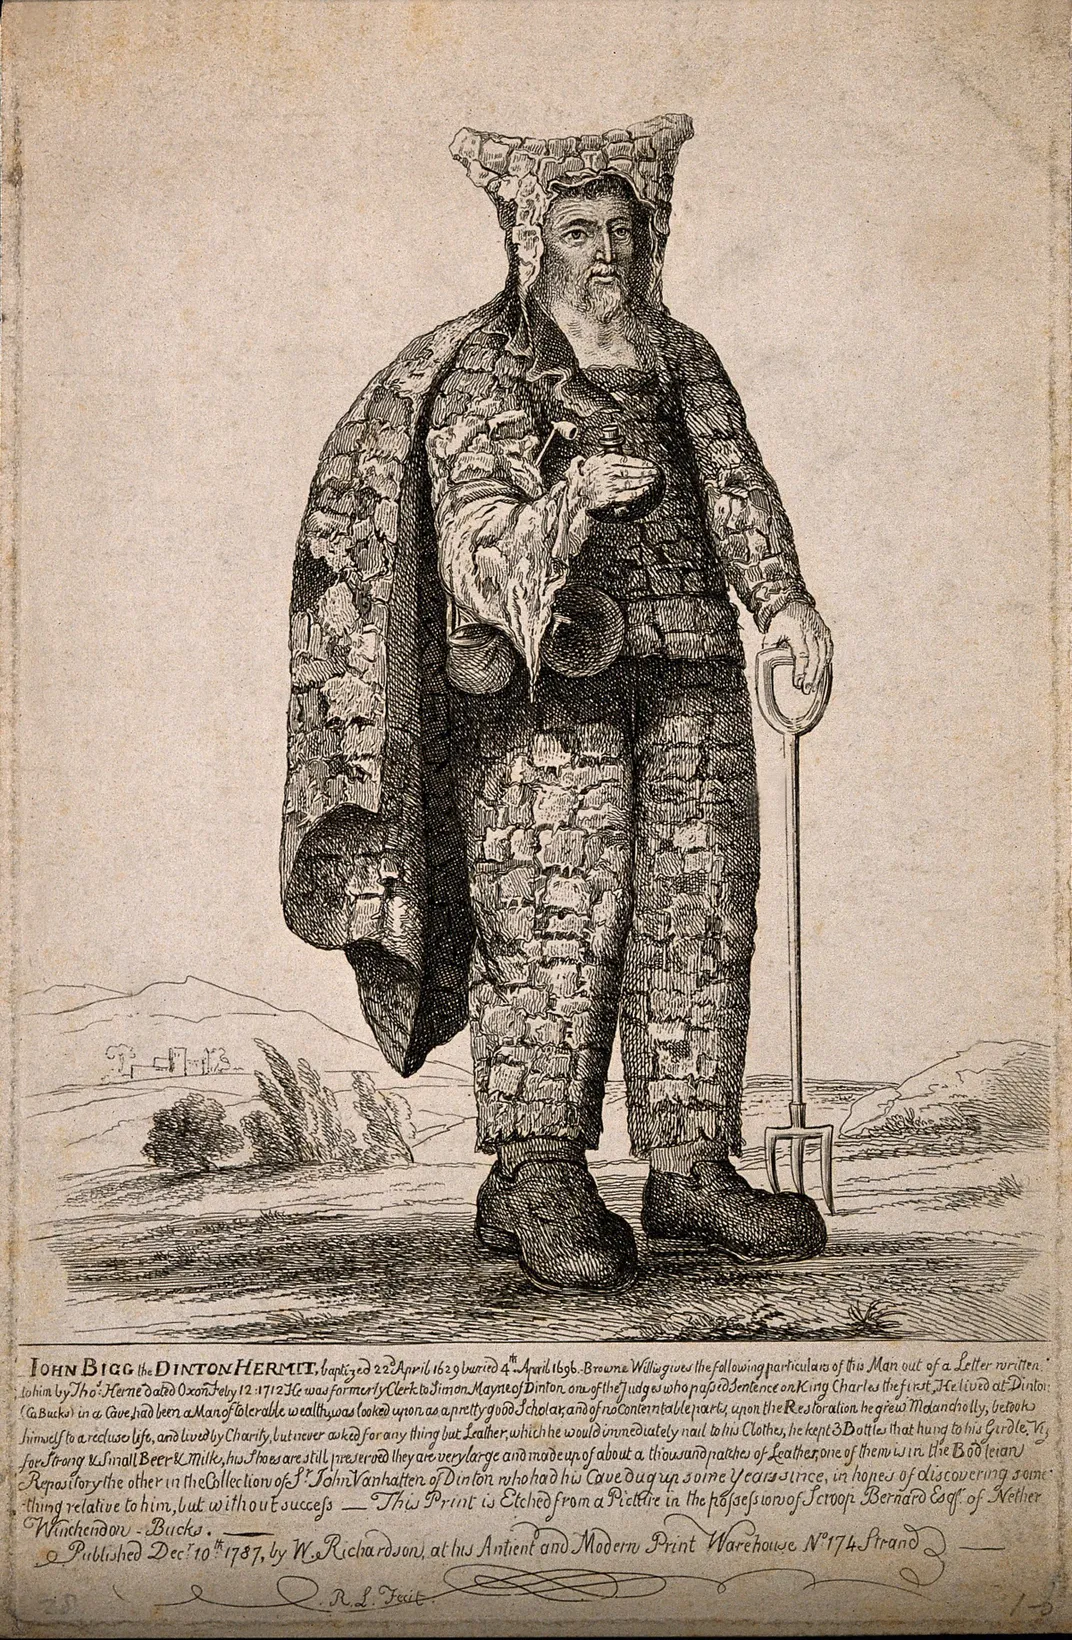 An 18th-century etching of "eccentric hermit" John Bigg